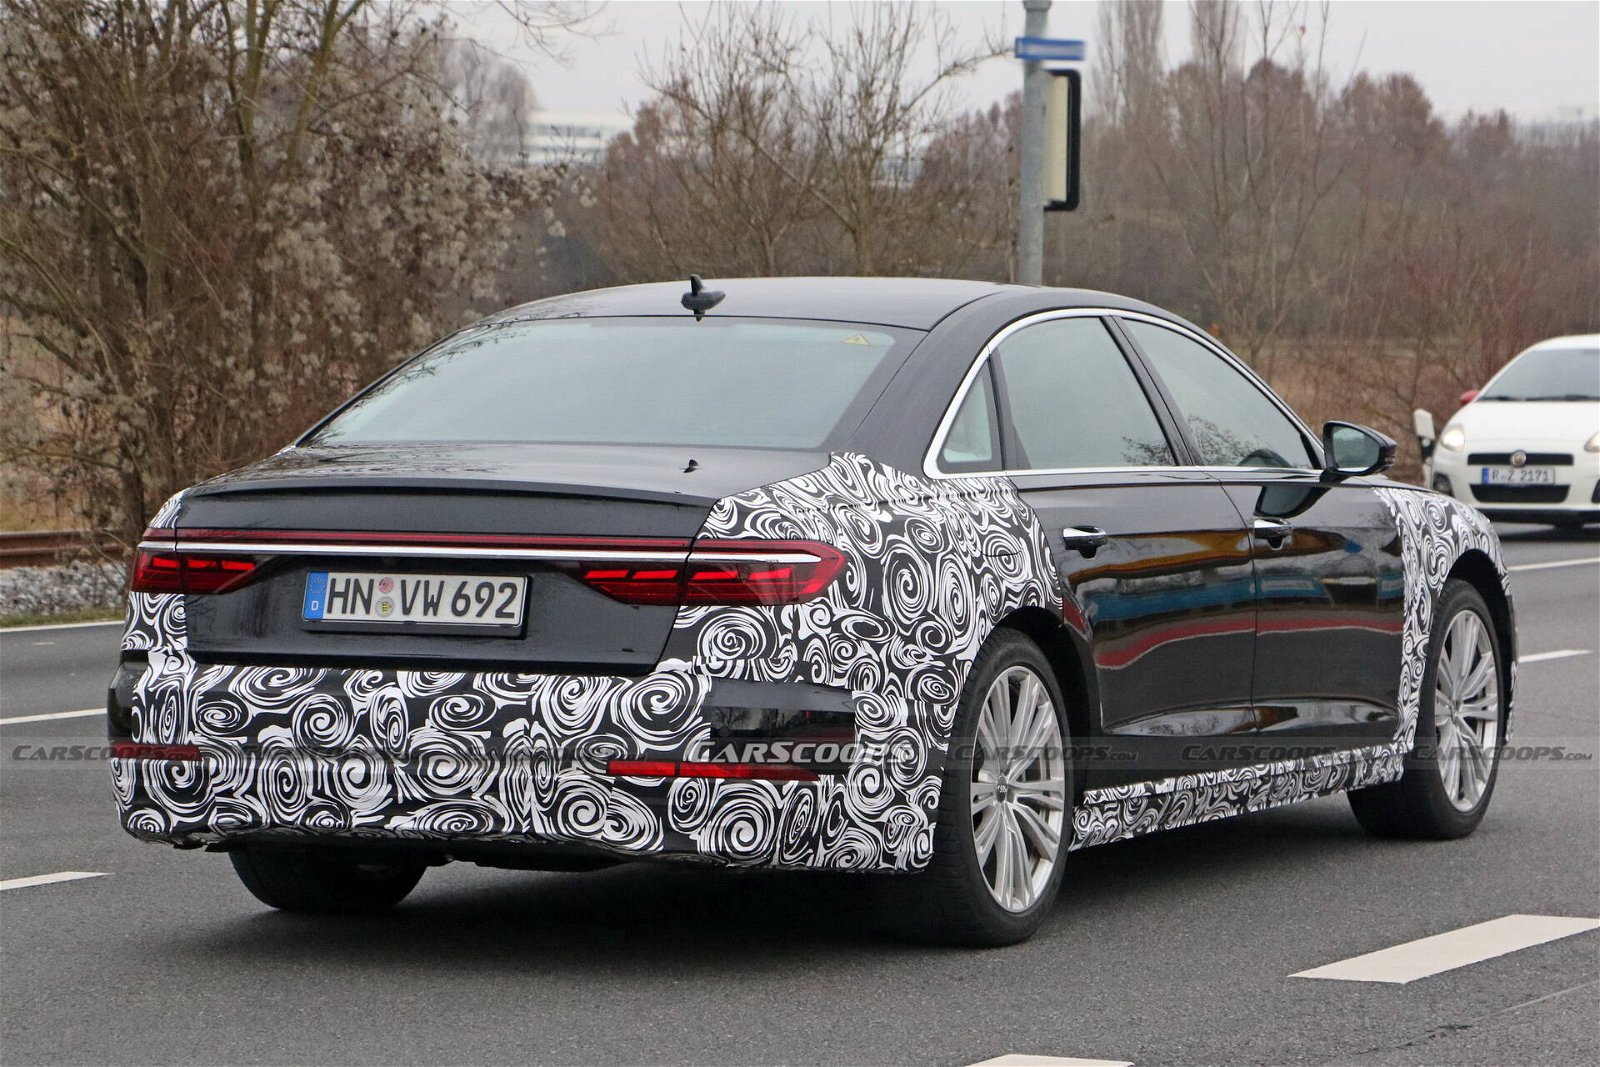 Immagine di La nuova Audi A8 si mostra in foto camuffata